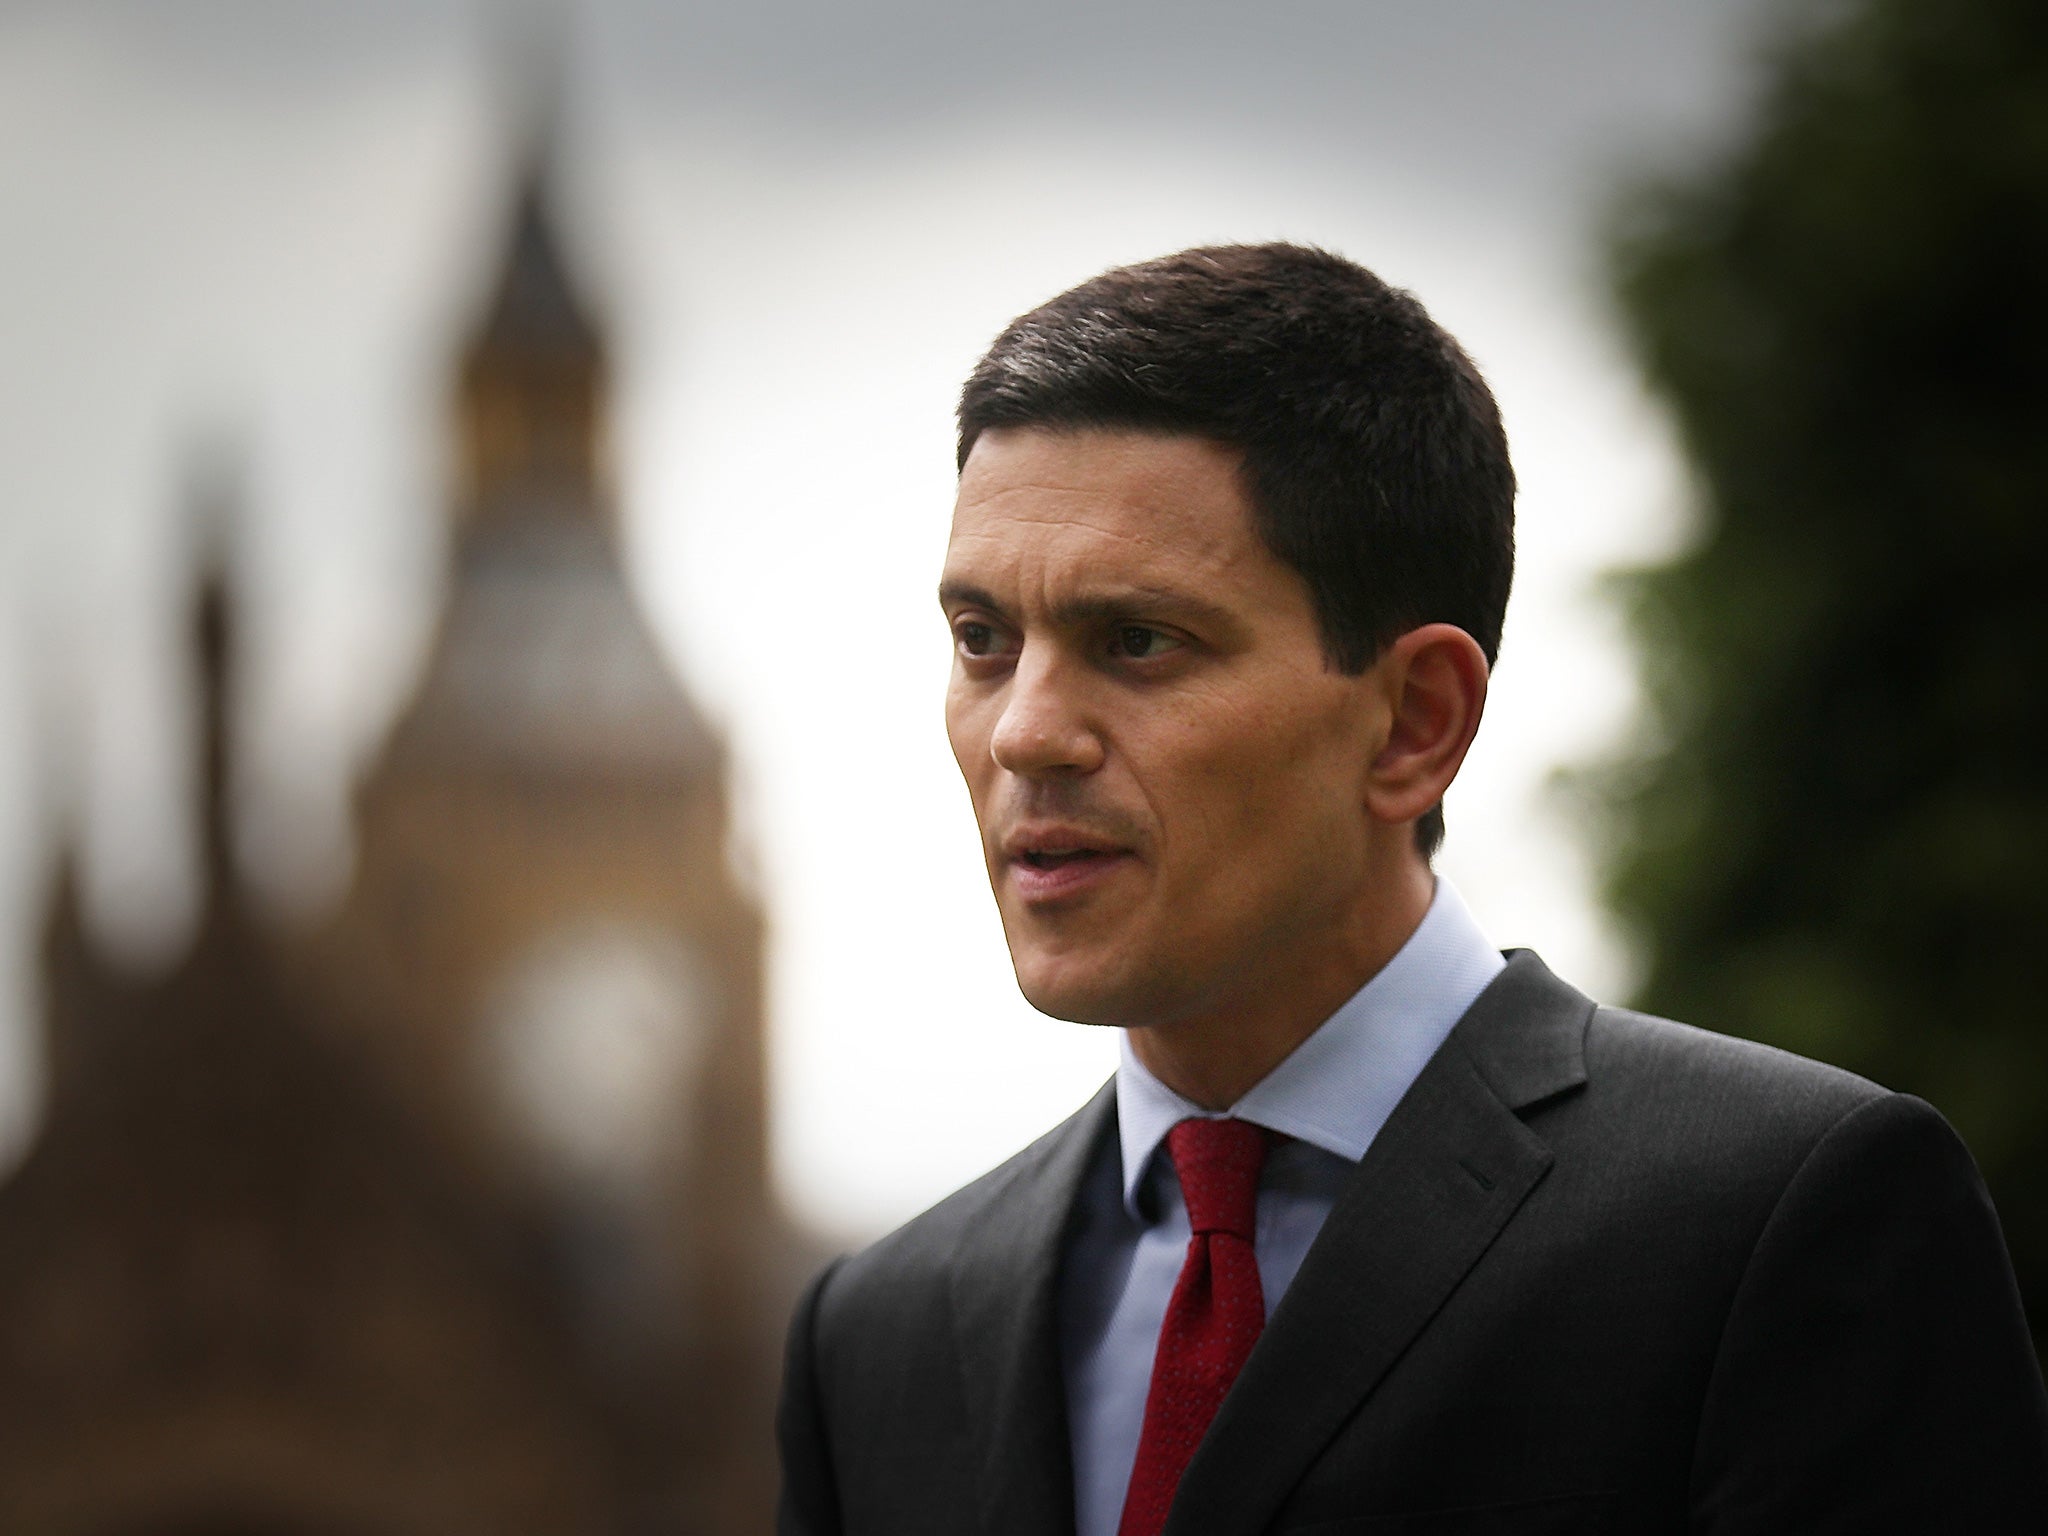 David Miliband heads the humanitarian aid organisation International Rescue Committee